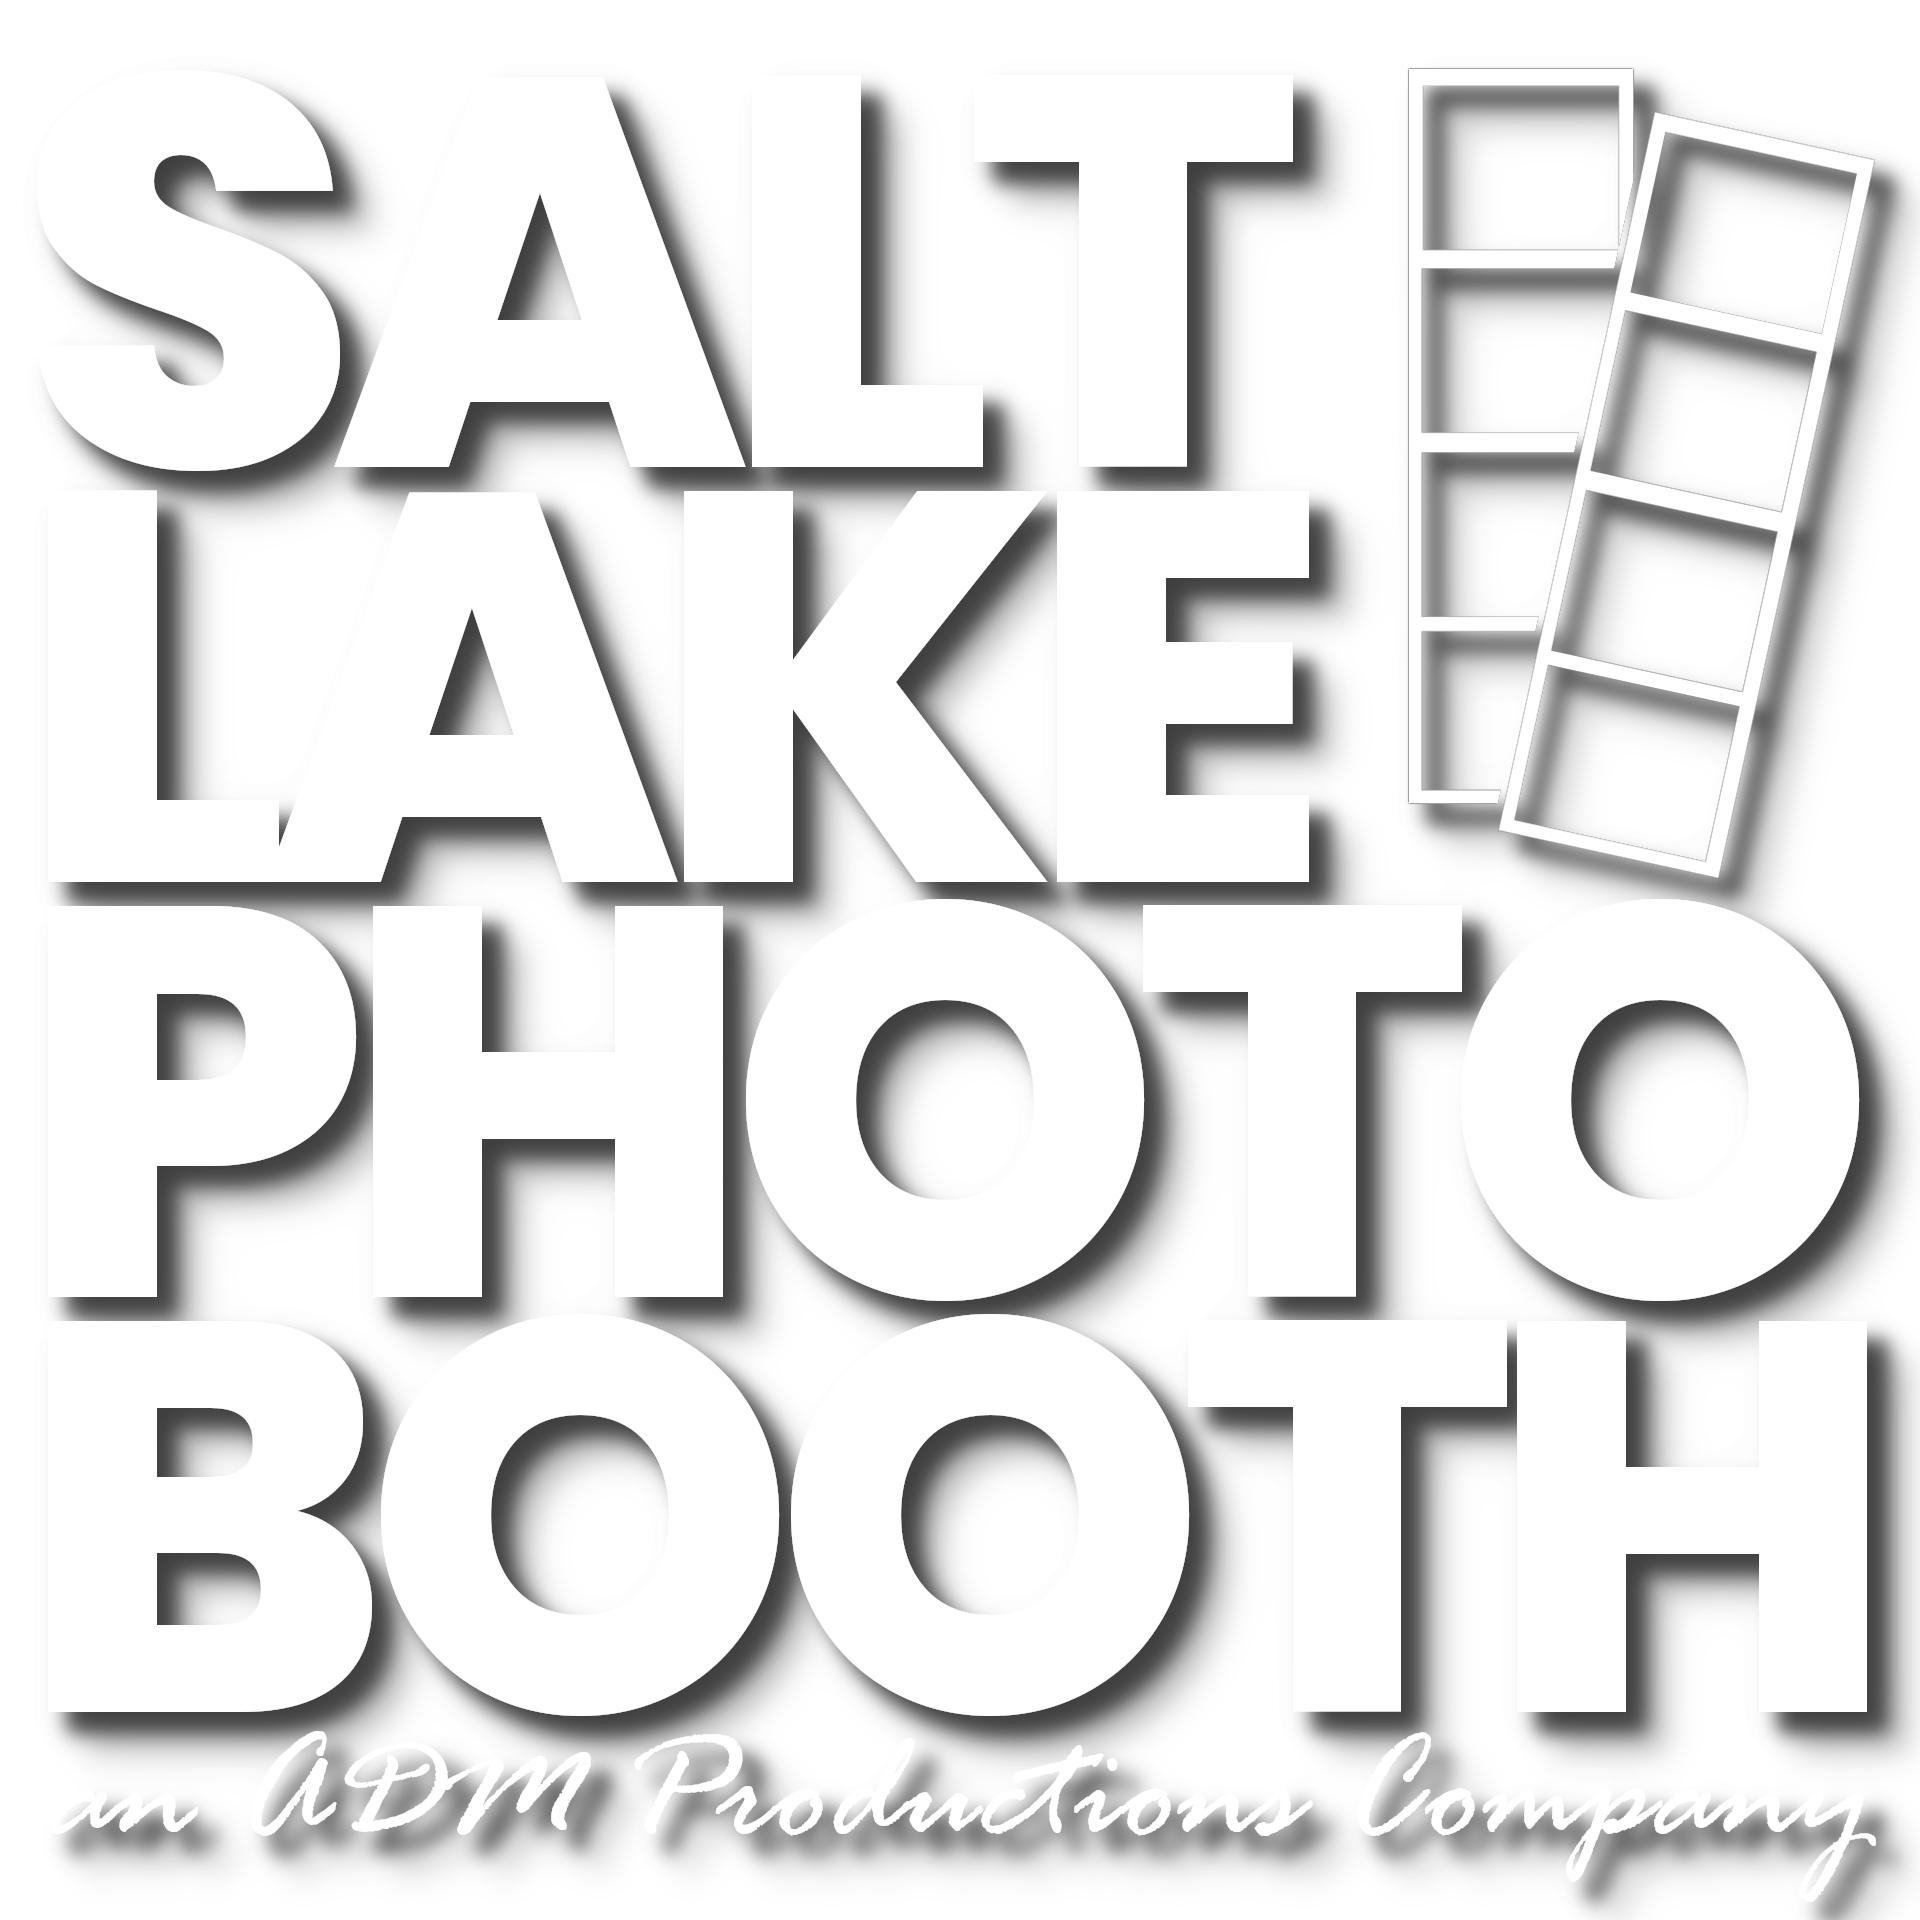 Salt Lake Photo Booth - ADM Productions